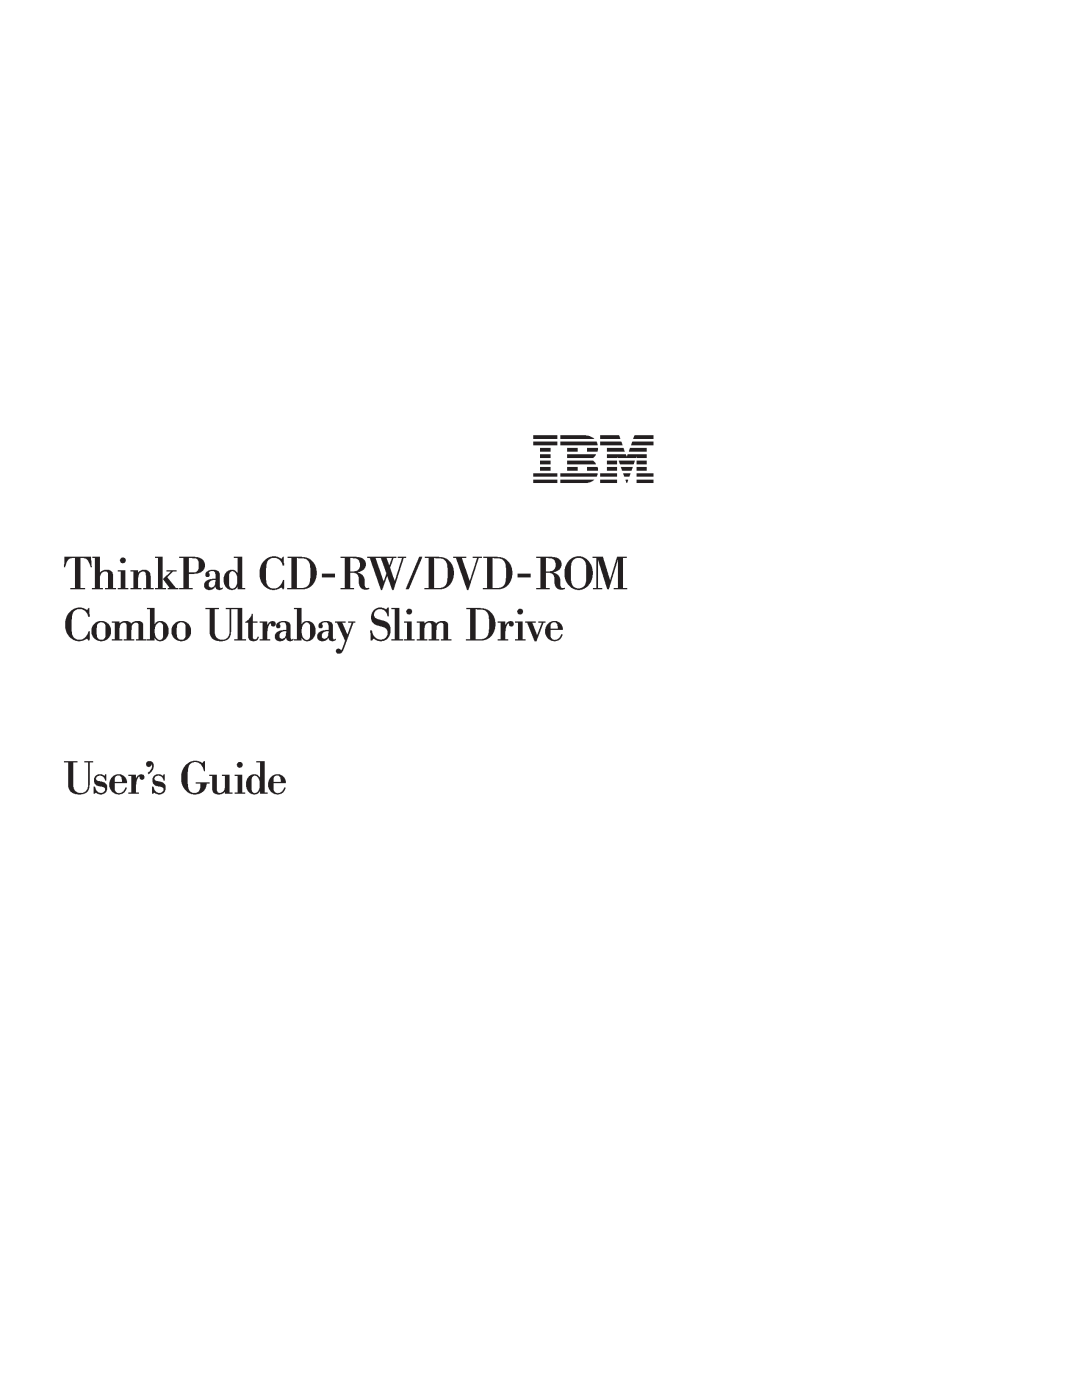 IBM 22P7007 manual User’s Guide, ThinkPad CD-RW/DVD-ROM Combo Ultrabay Slim Drive 